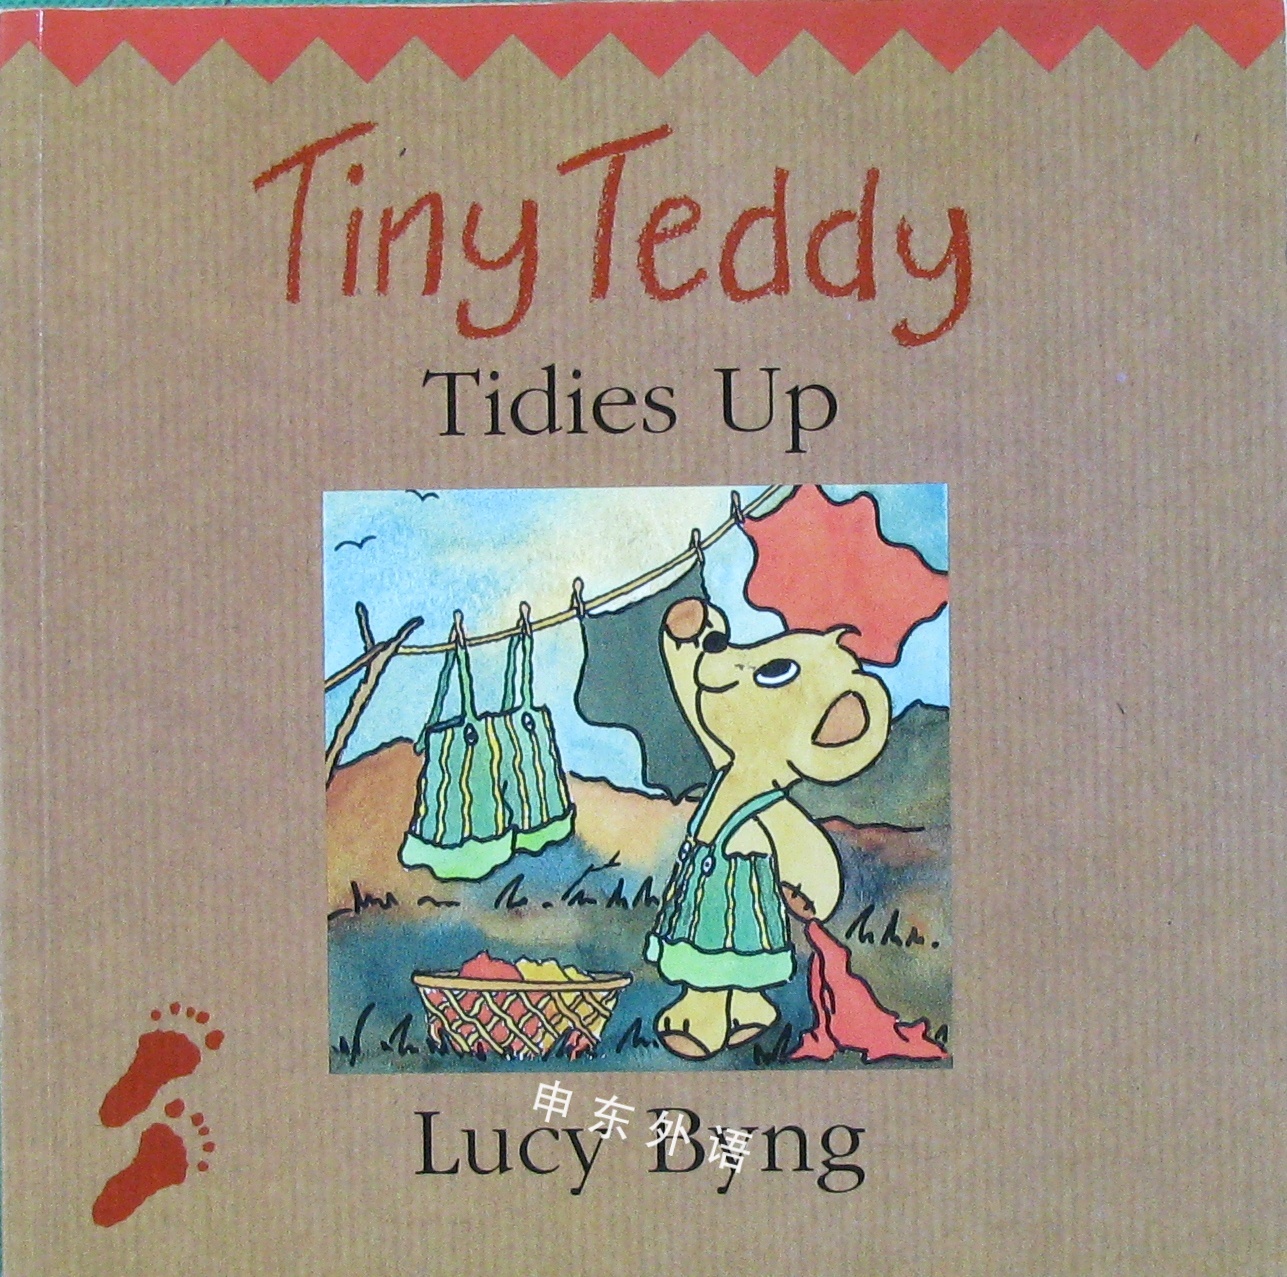 tiny teddy tidies up